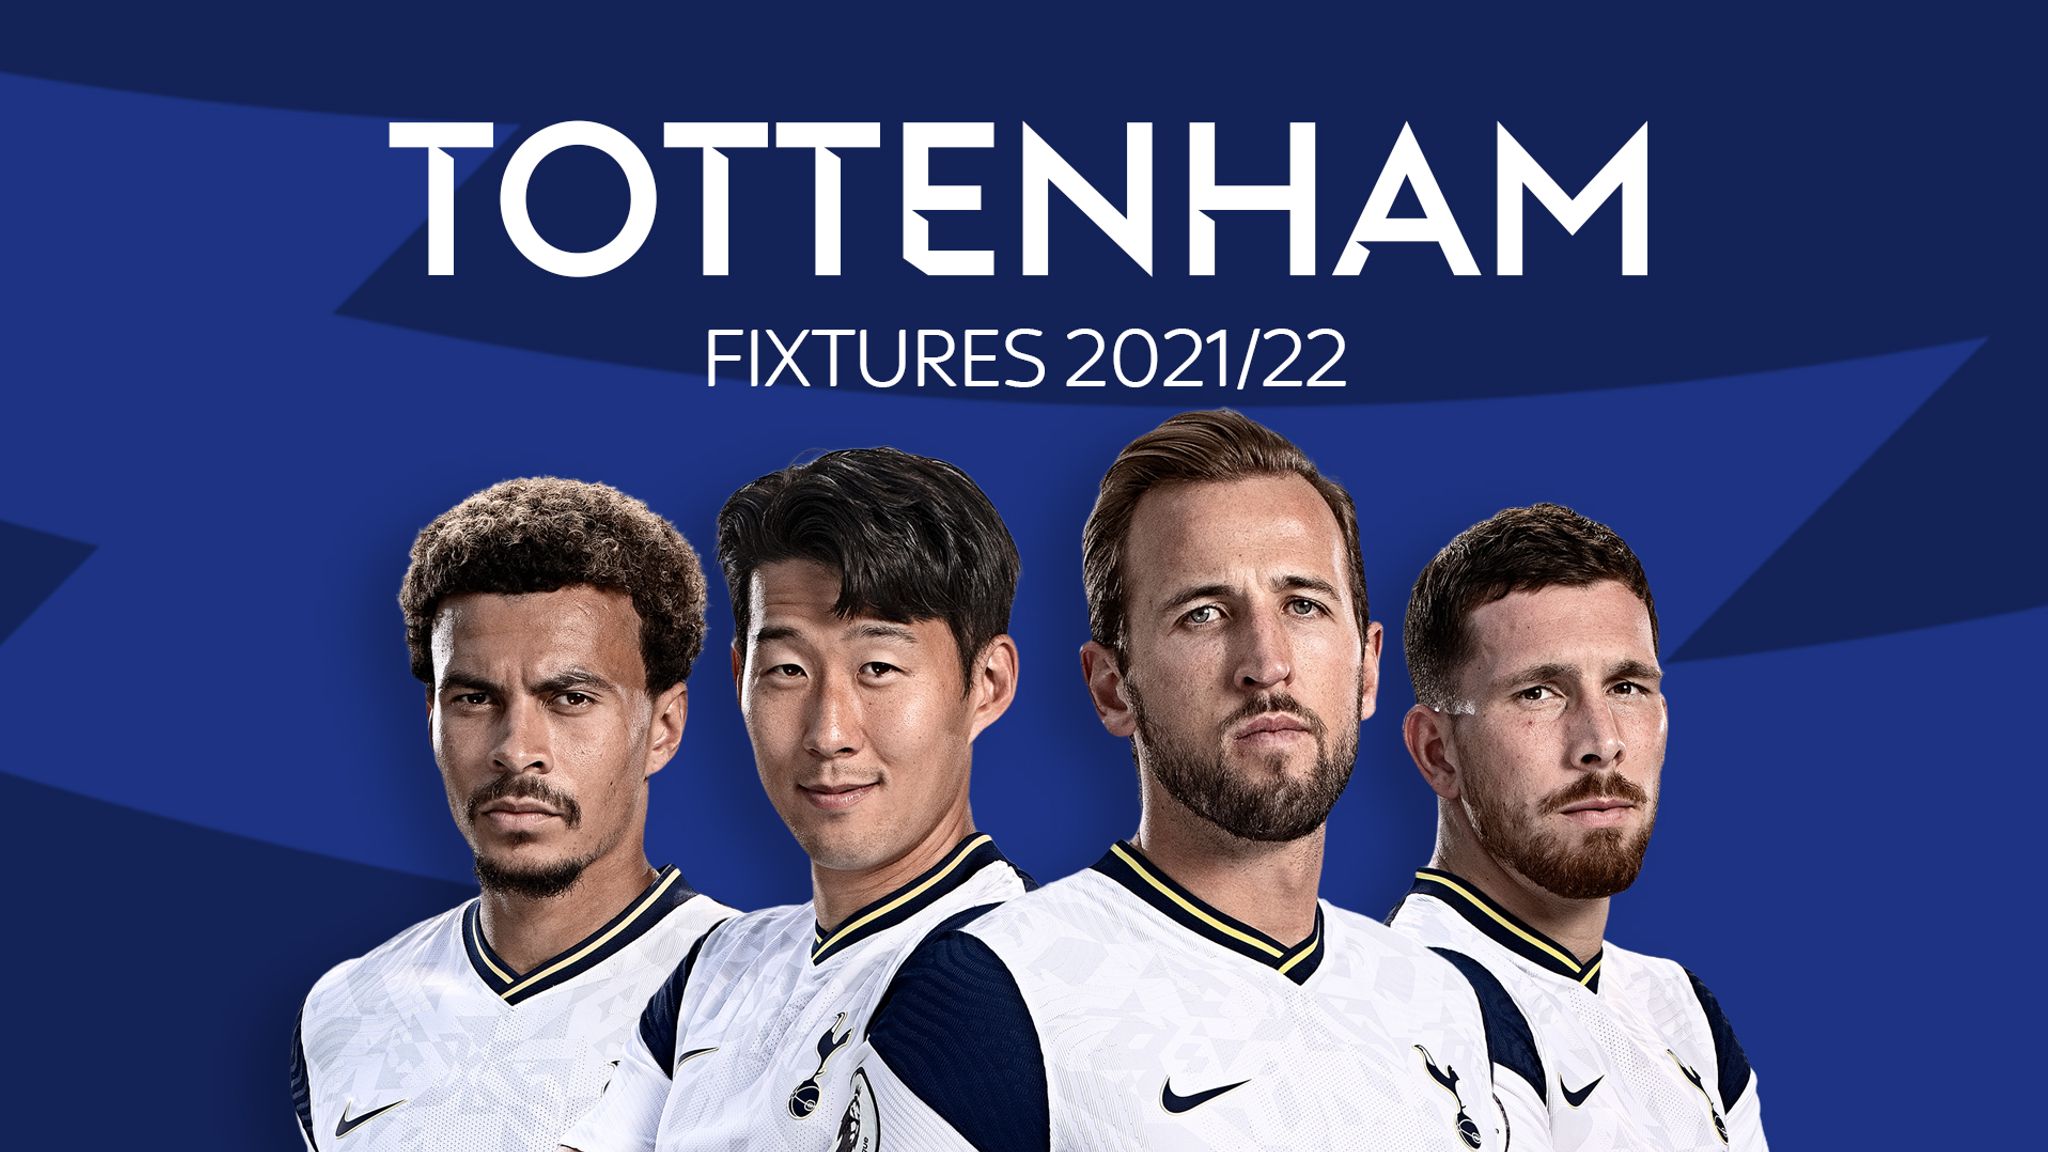 Tottenham: Premier League 2021/22 fixtures and schedule | Football News | Sky Sports